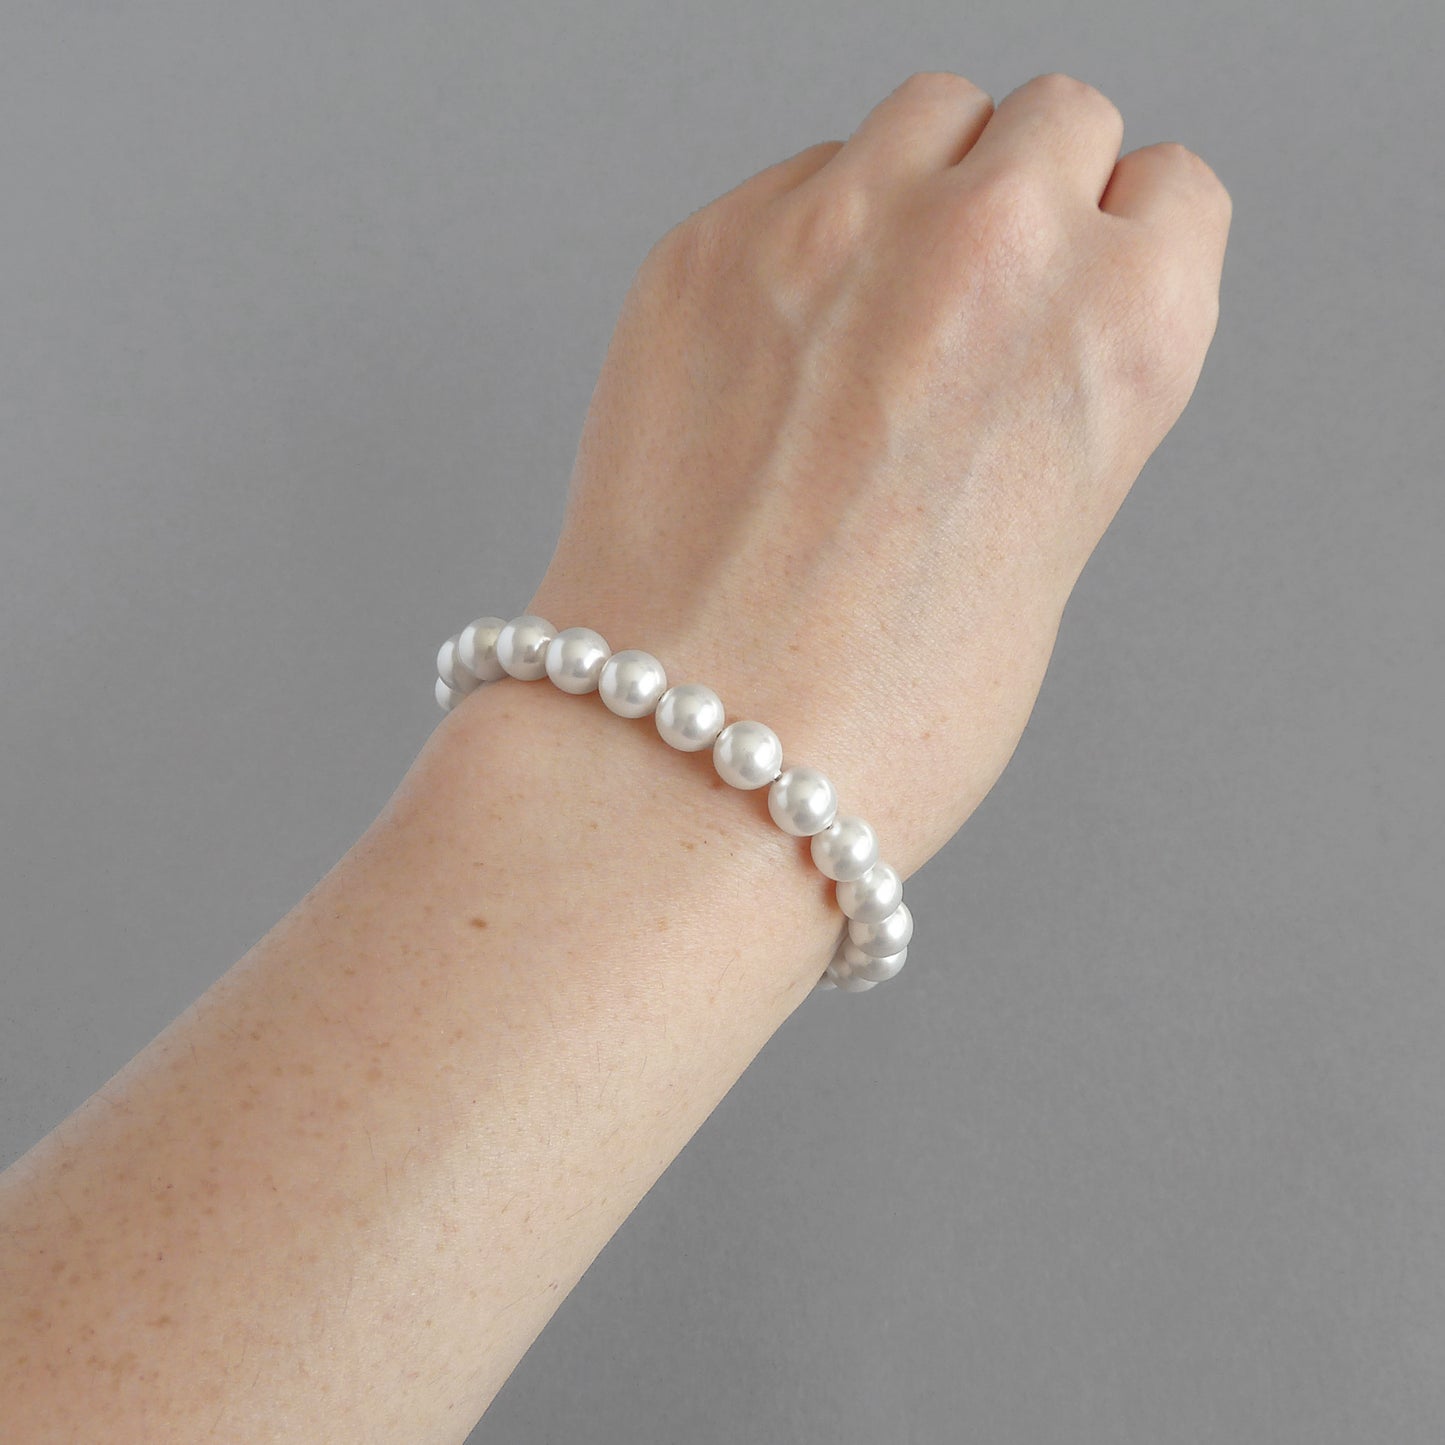 Simple White Glass Pearl Bridal Bracelet - Single Strand, White Pearl Bracelets for Weddings